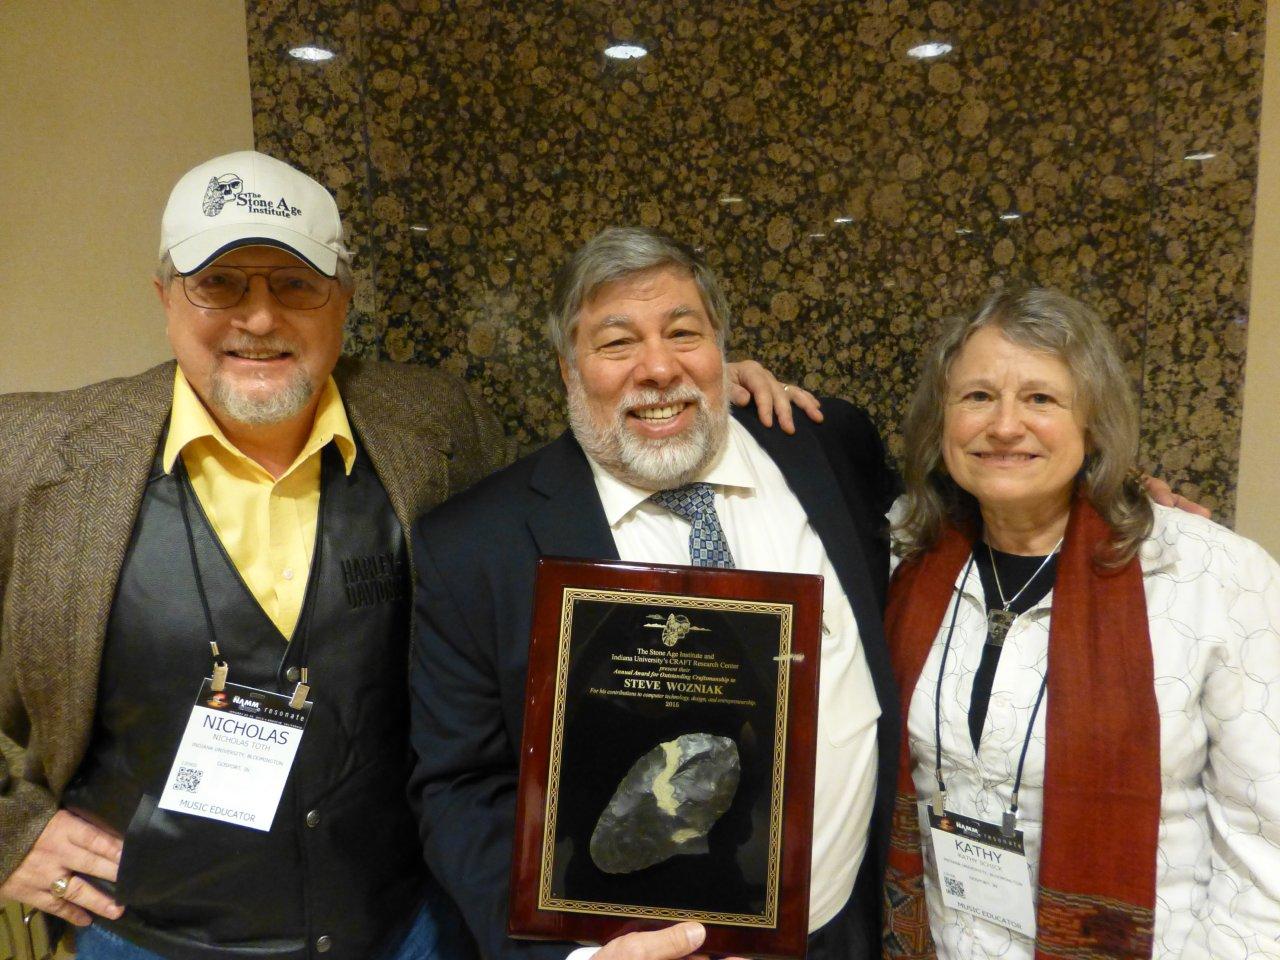 Nicholas Toth, Steve Wozniak, and Kathy Schick